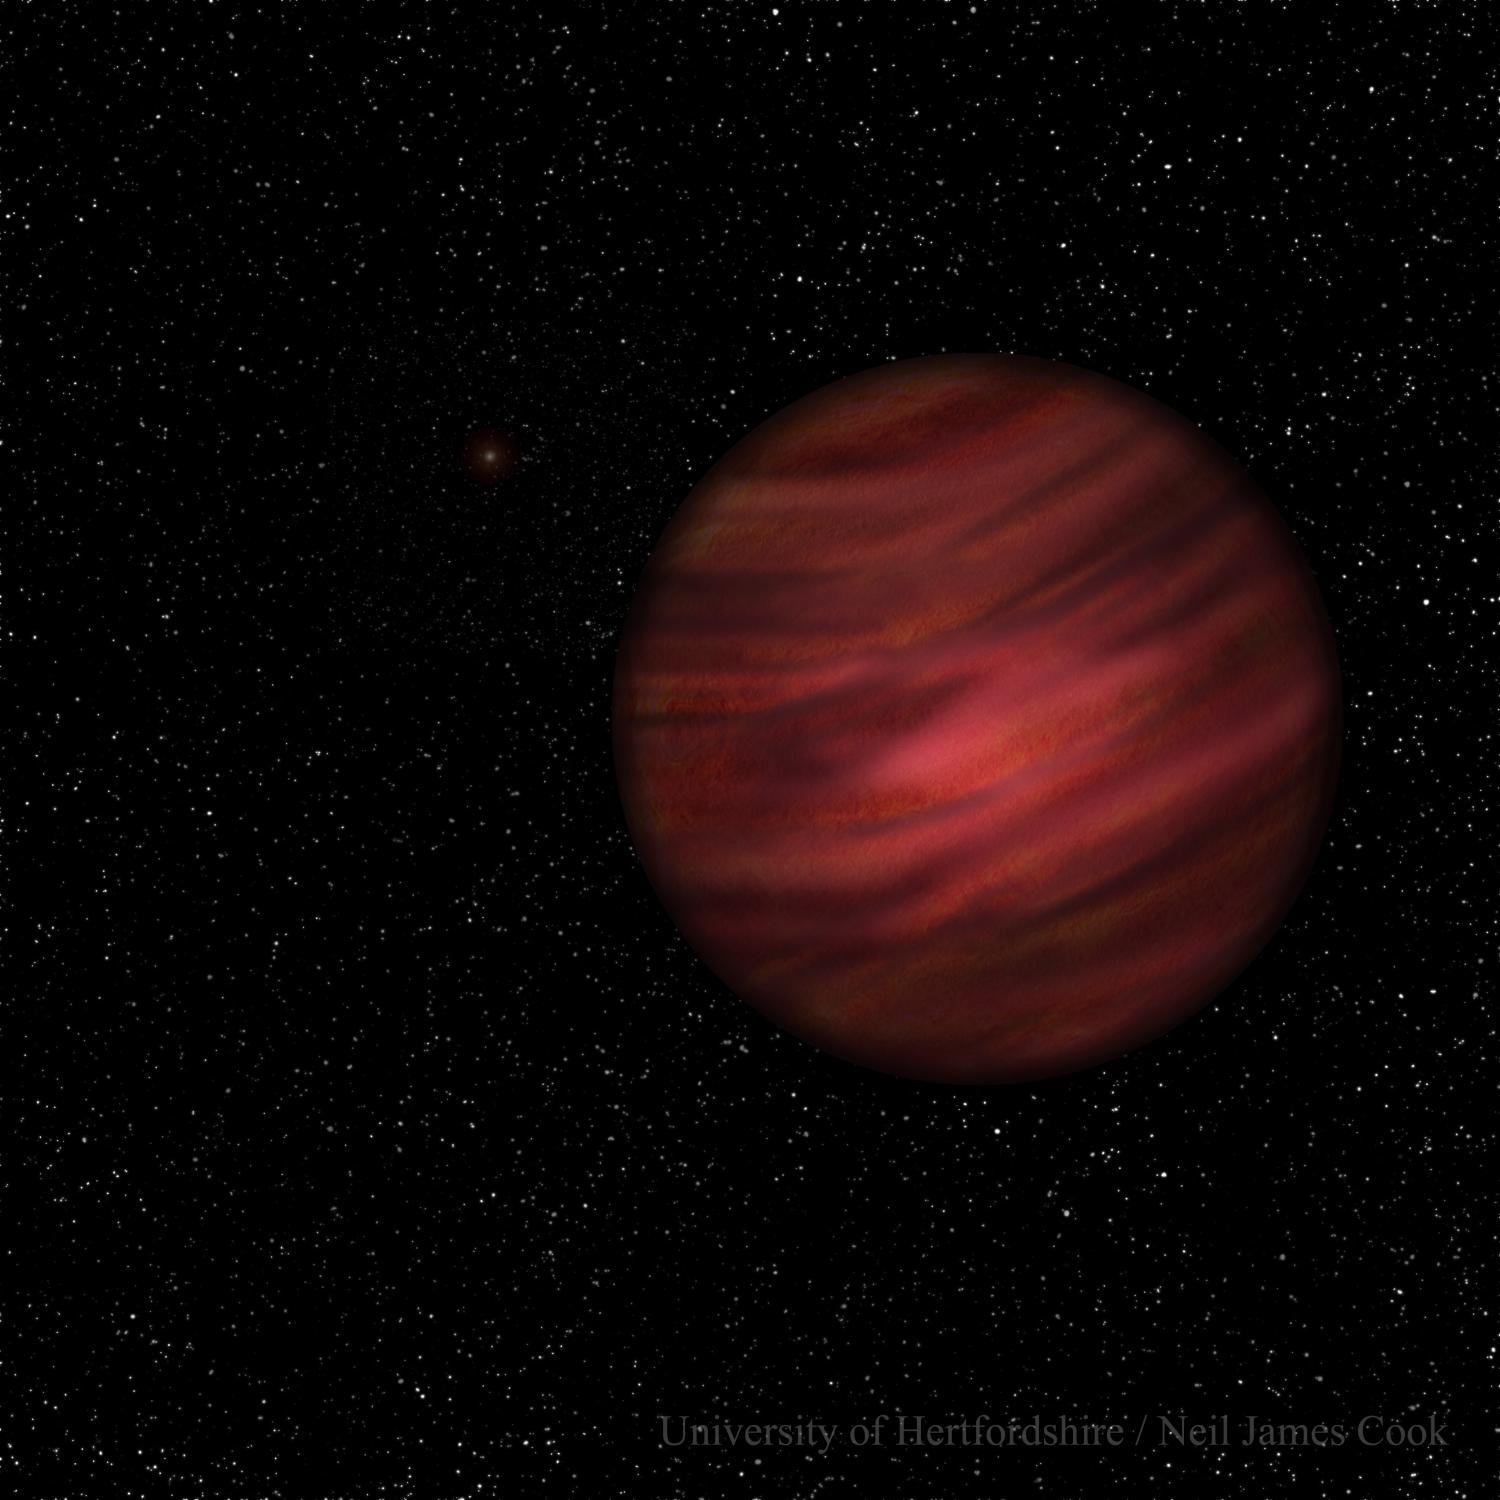 Fantáziarajz a 2MASS J2126-os jelzésű bolygóról